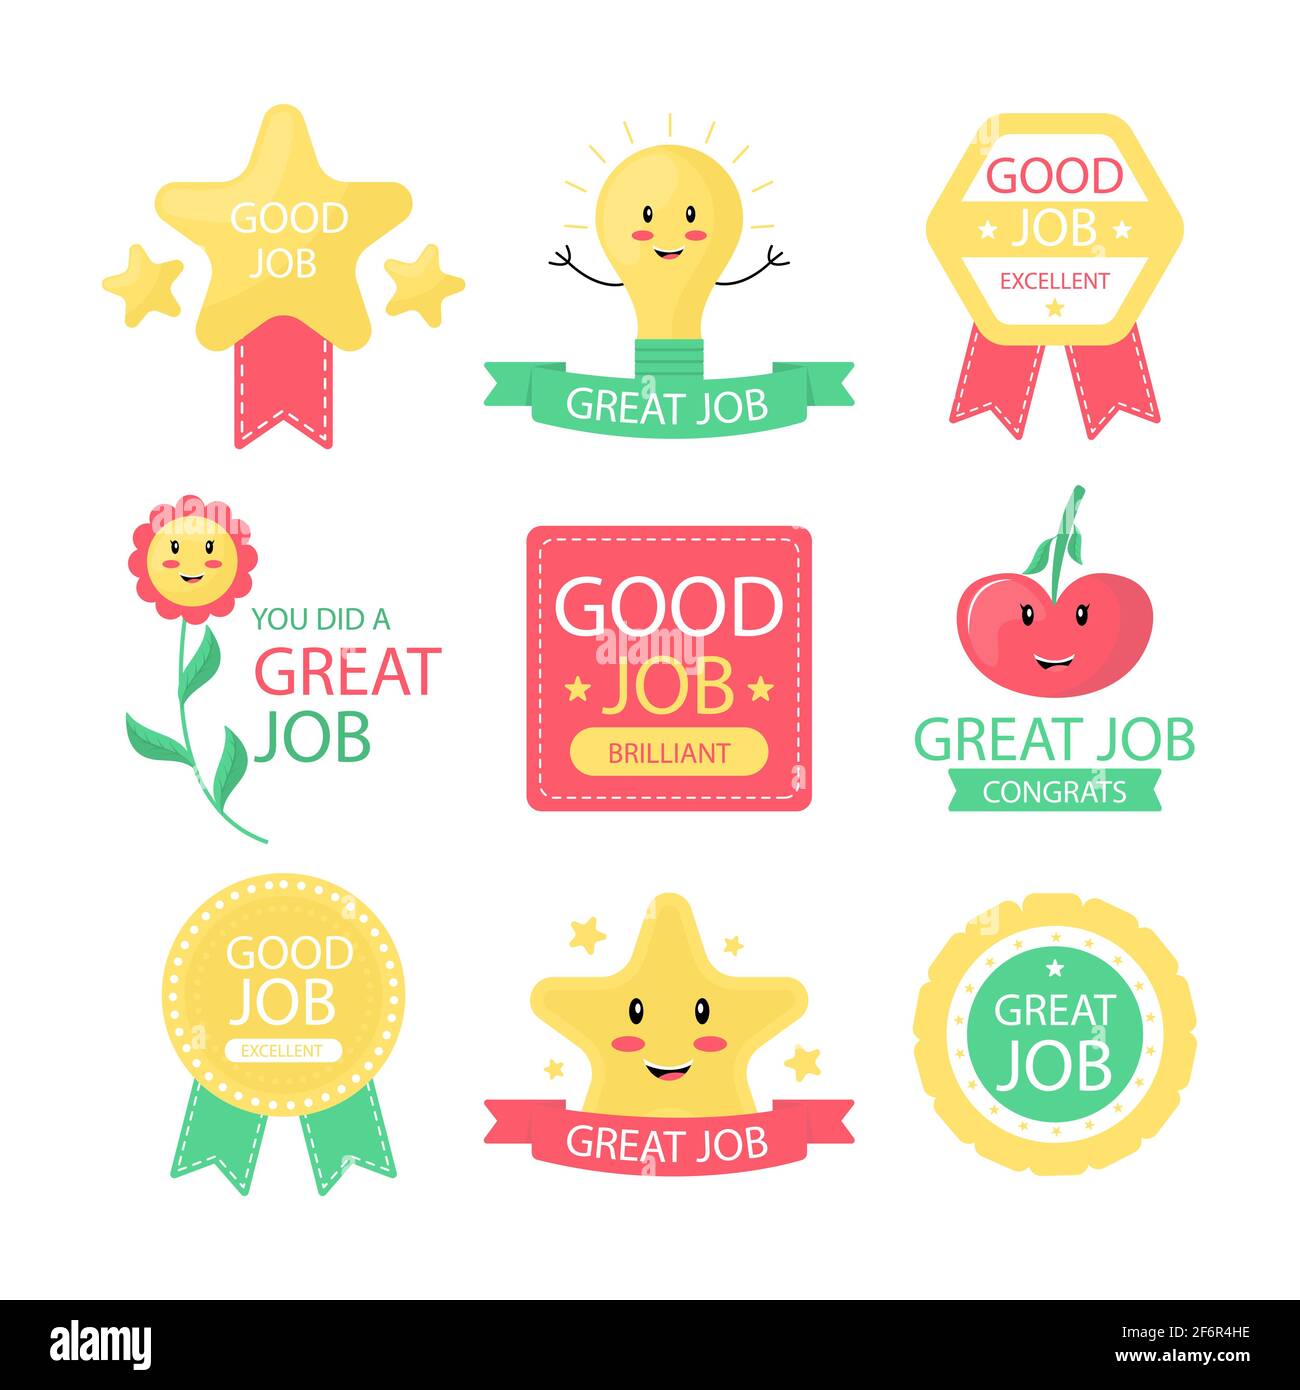 https://c8.alamy.com/comp/2F6R4HE/flat-good-job-and-great-job-stickers-vector-illustration-2F6R4HE.jpg